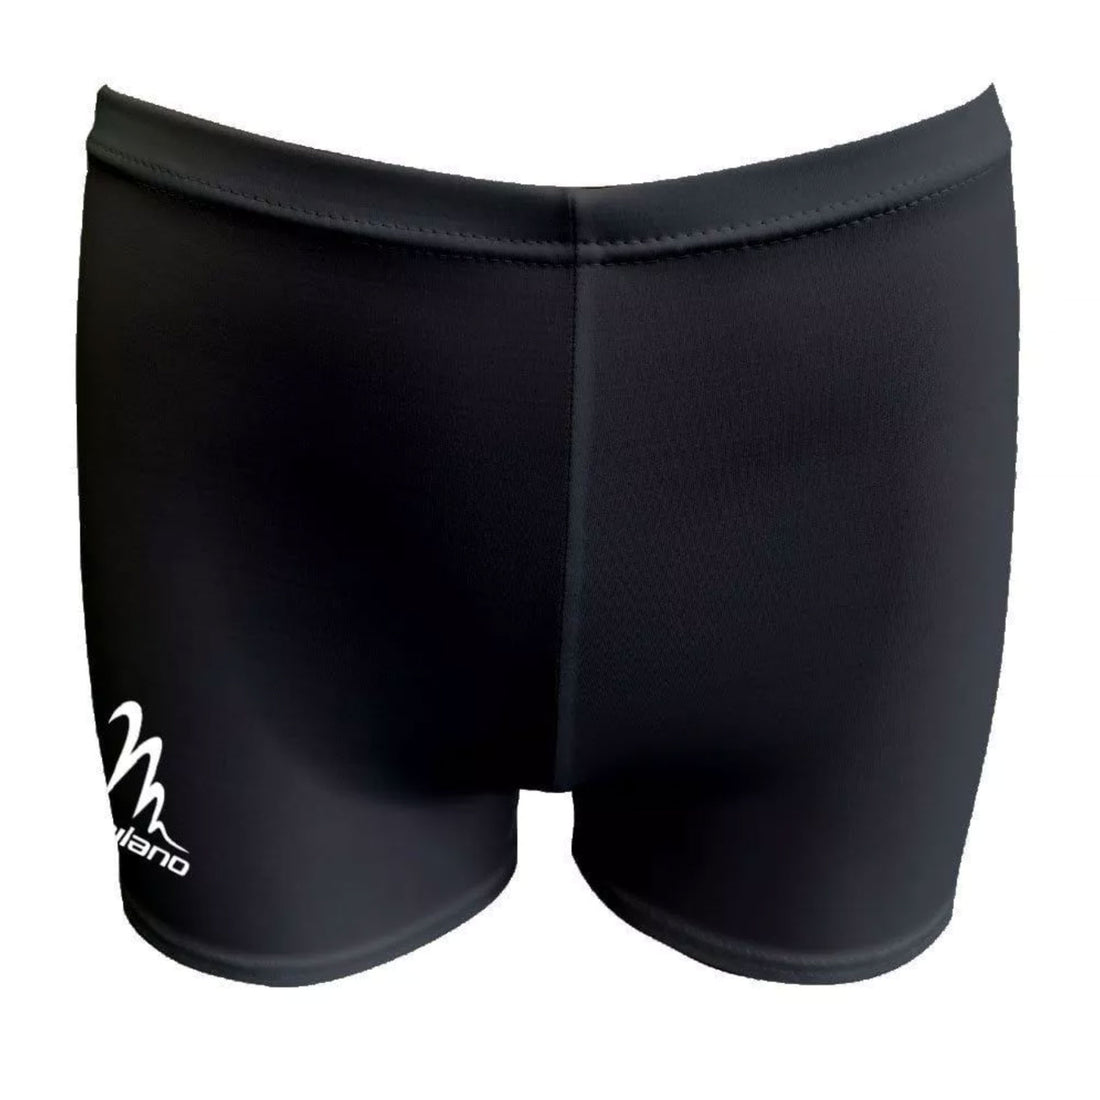 Pantalón corto de gimnasia de Milano Pro Sport en lycra negra